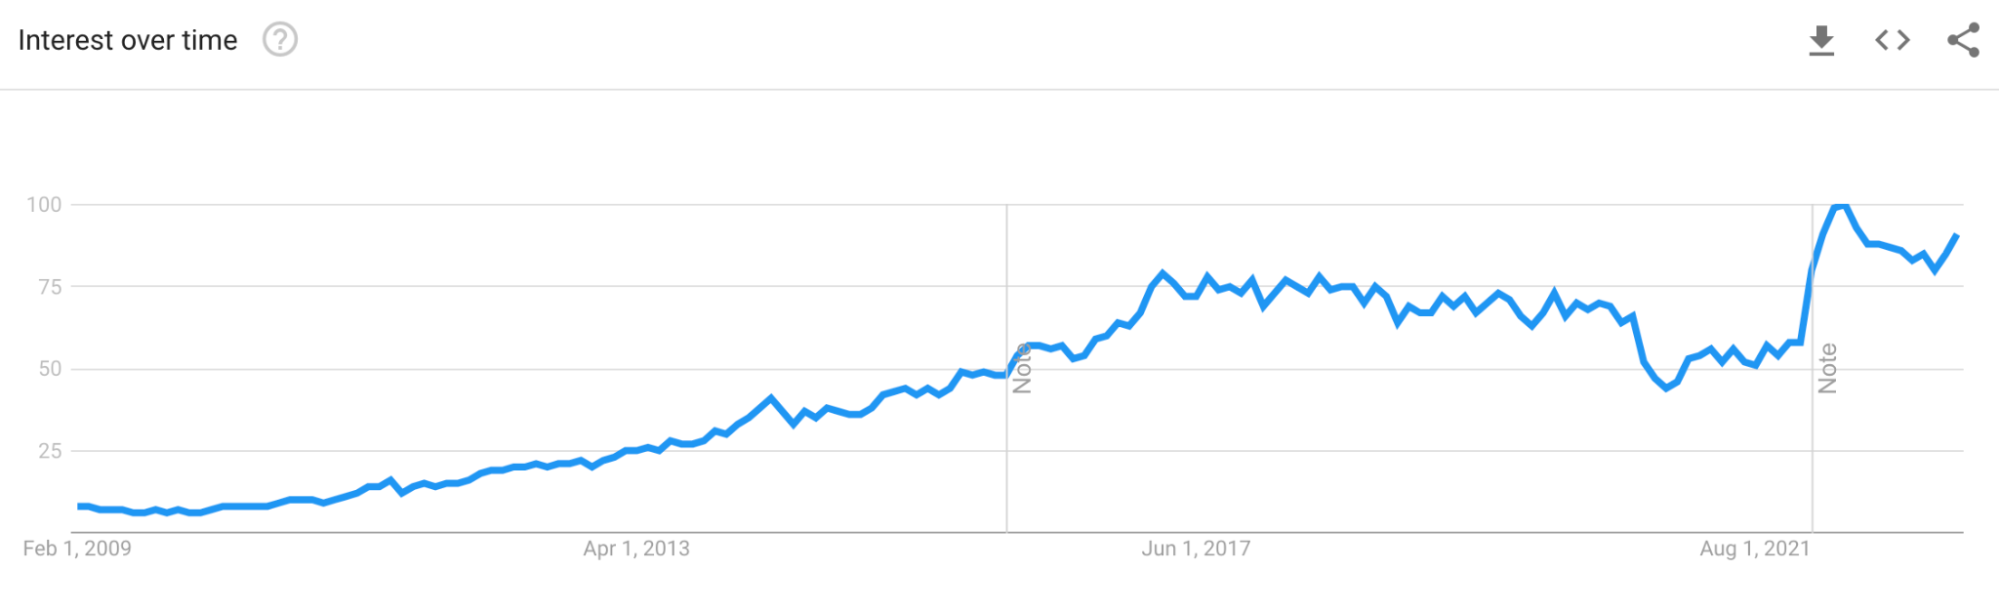 node-trends-over-time-google